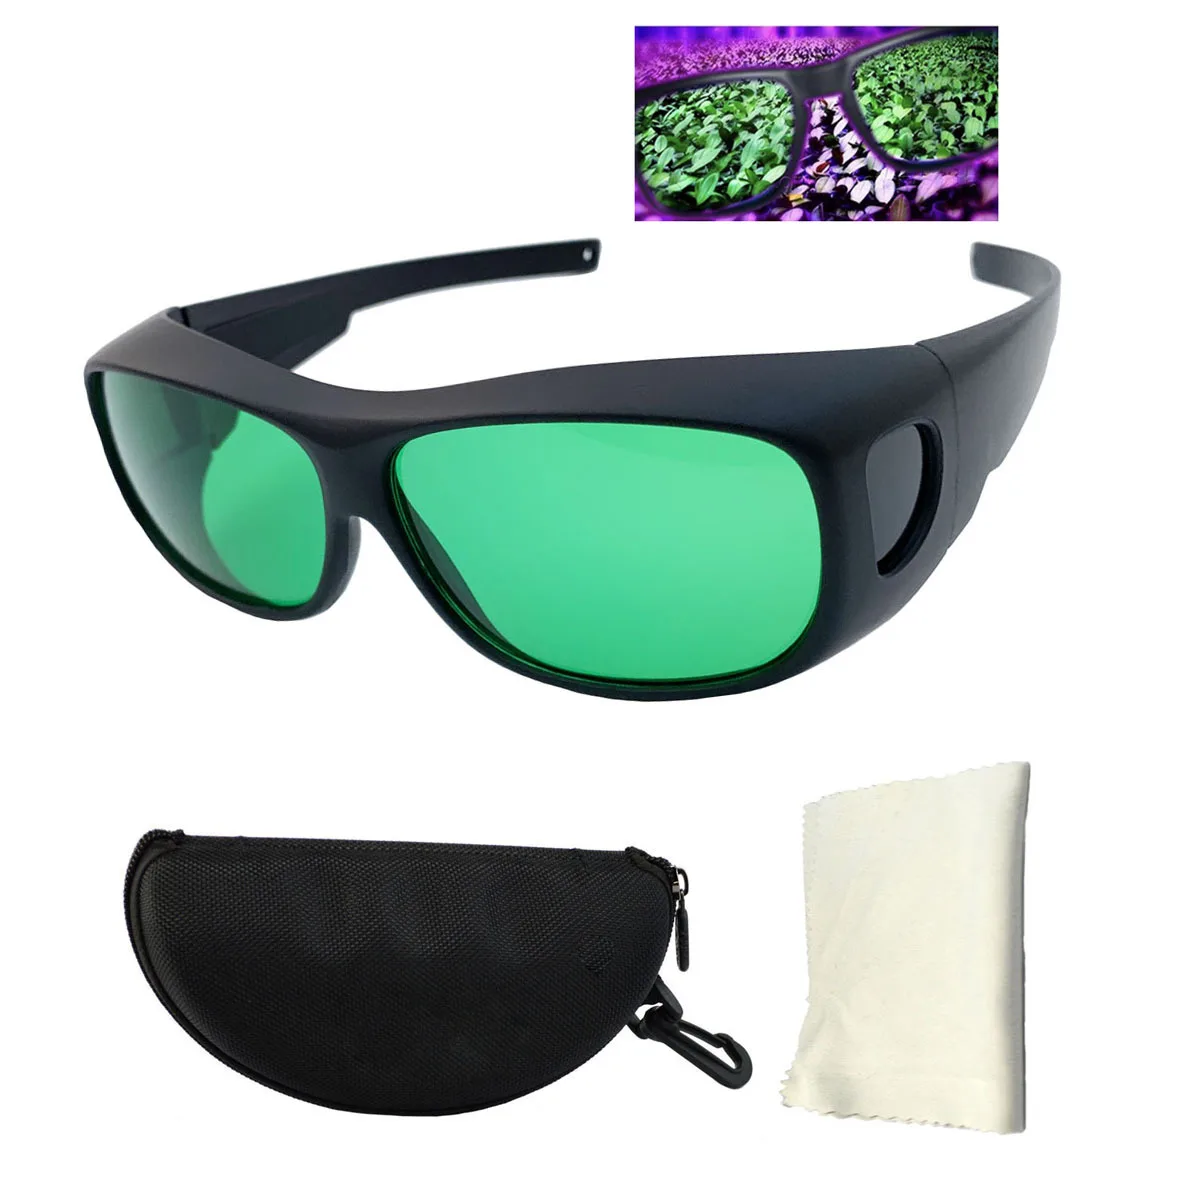 Planting Flowers and Vegetables Gardening Glasses Garden Glasses Grow Light Glasse400-710NM Eye Protection